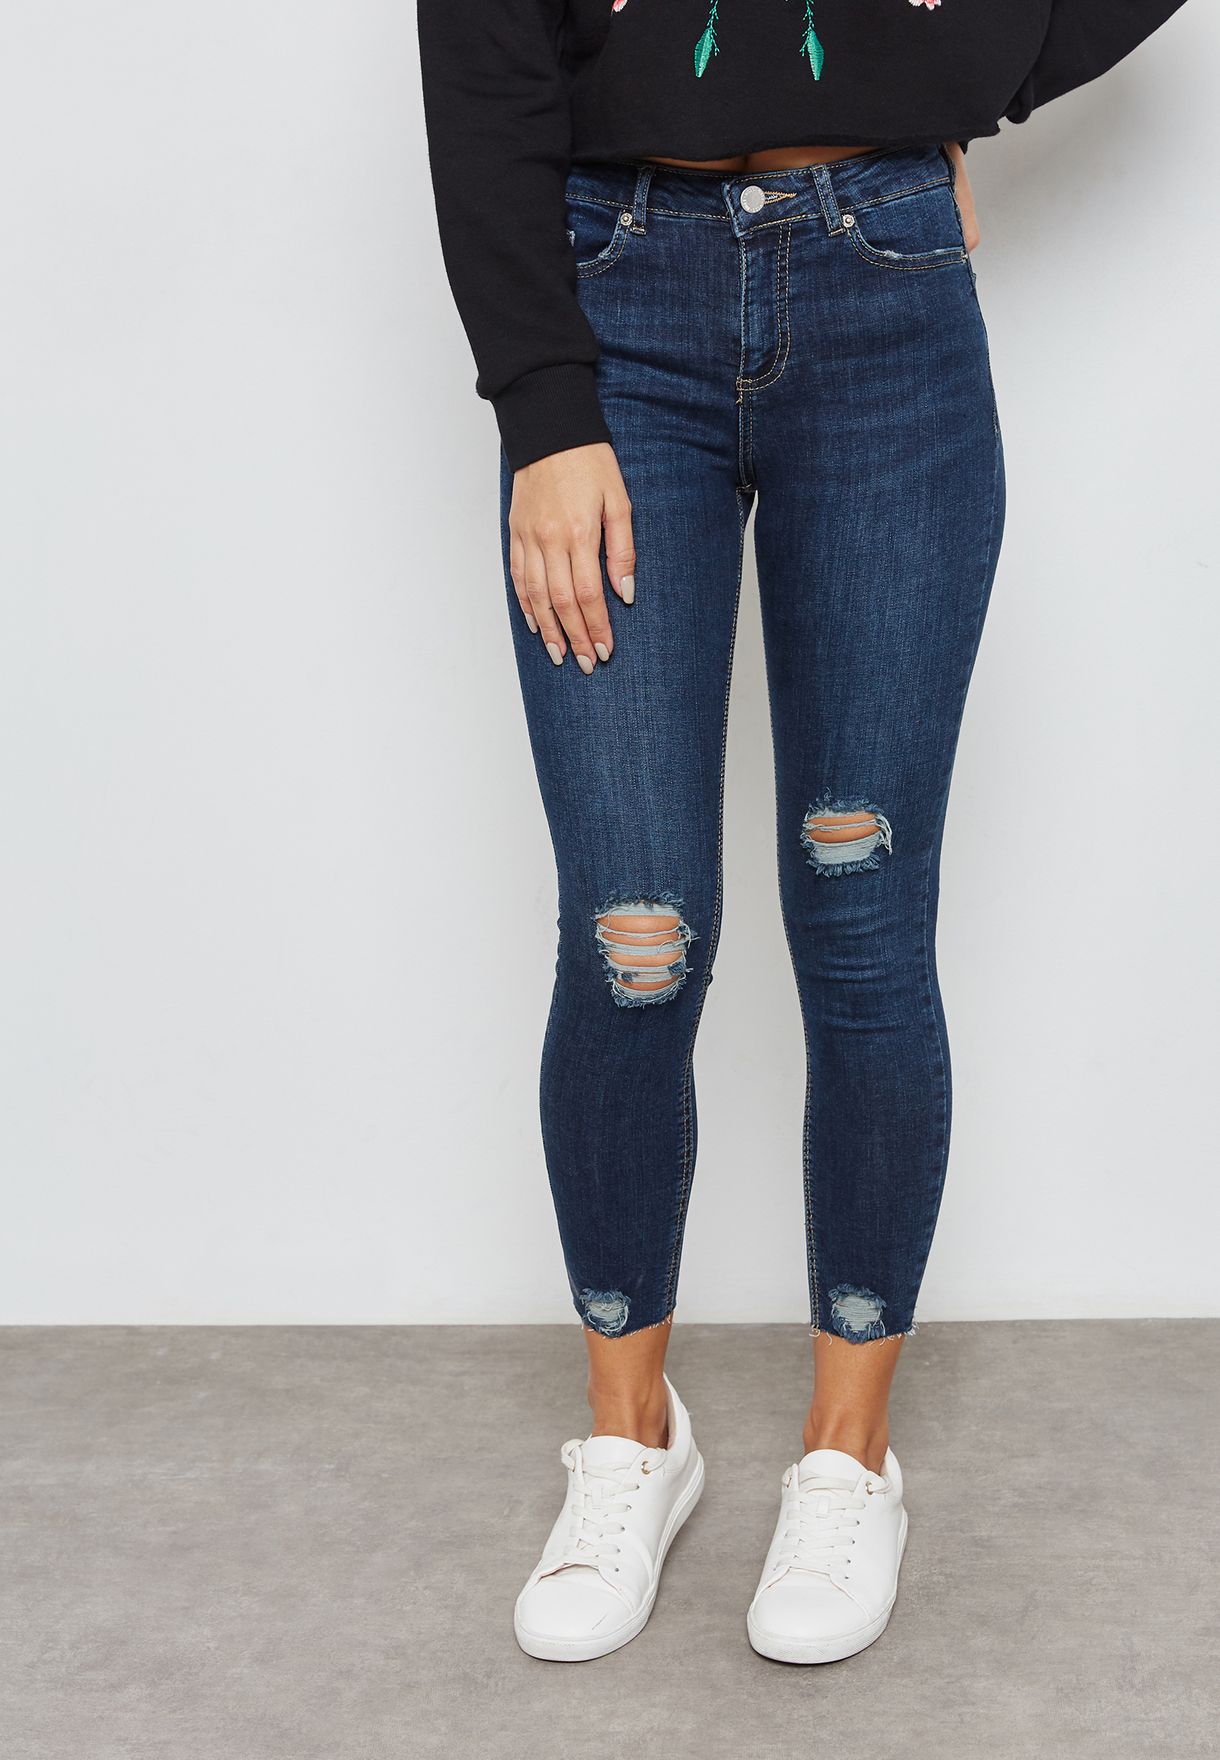 petite jeans ankle grazer